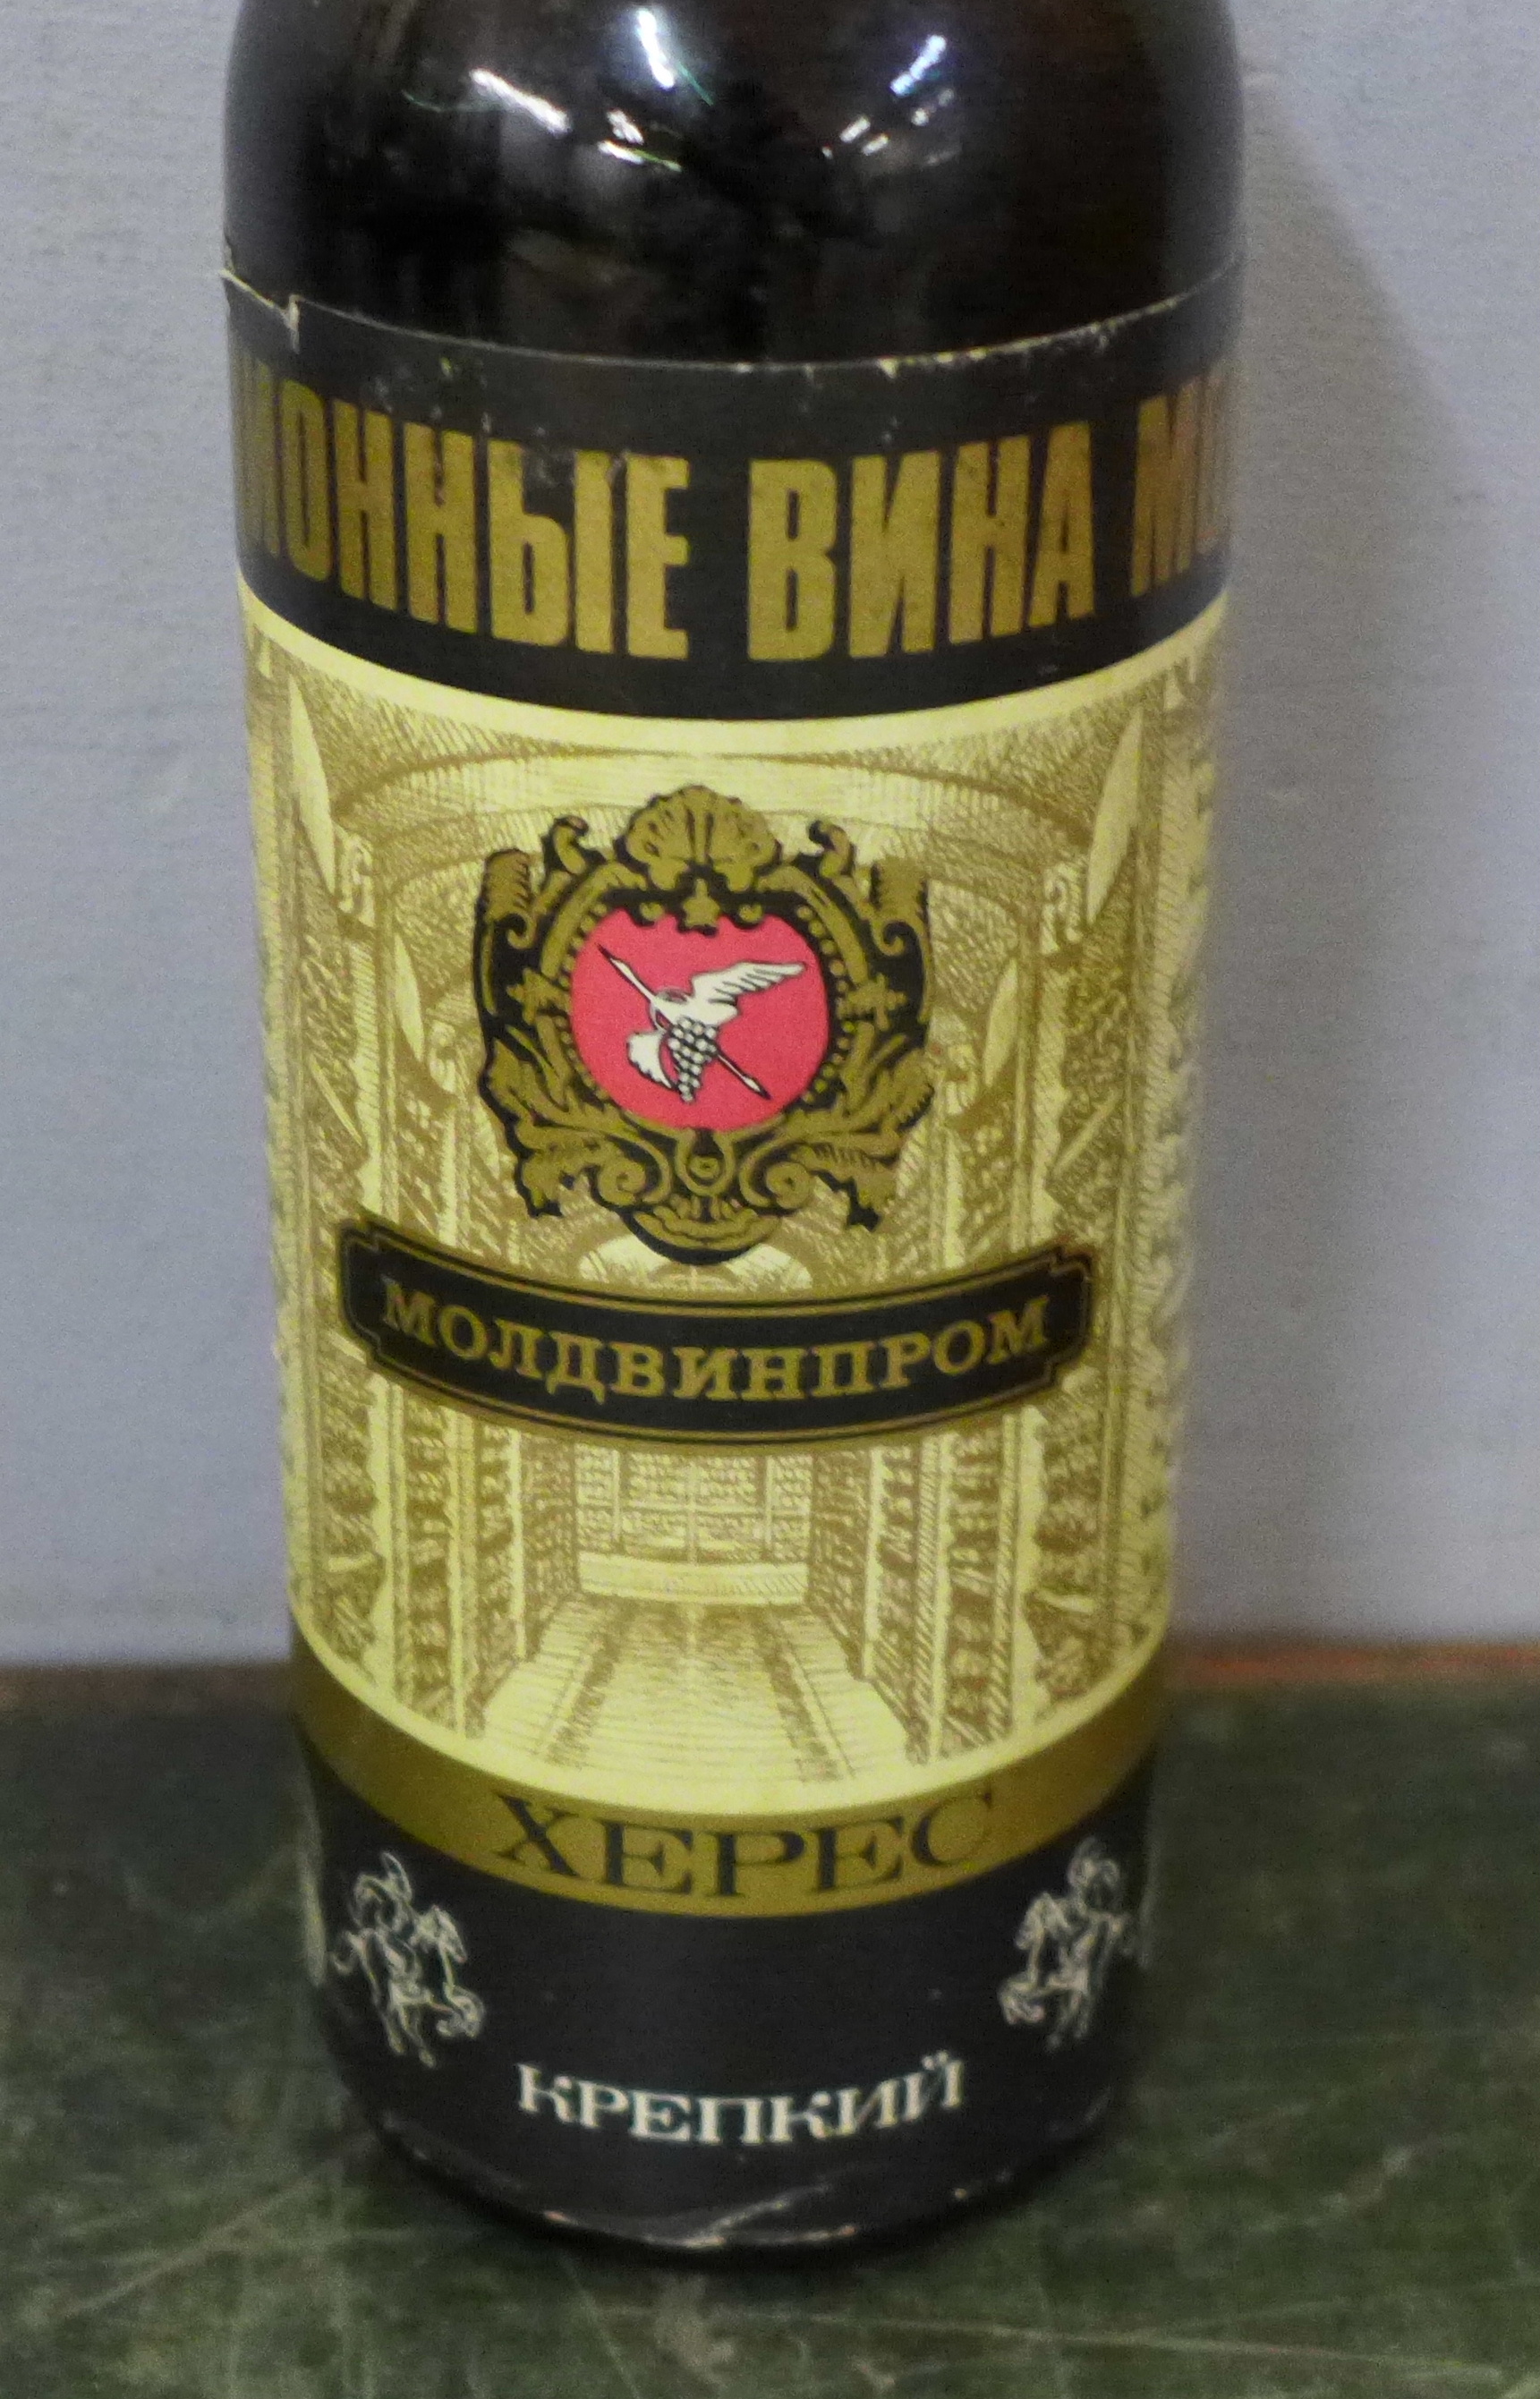 A bottle of Moldavian wine - Image 2 of 5